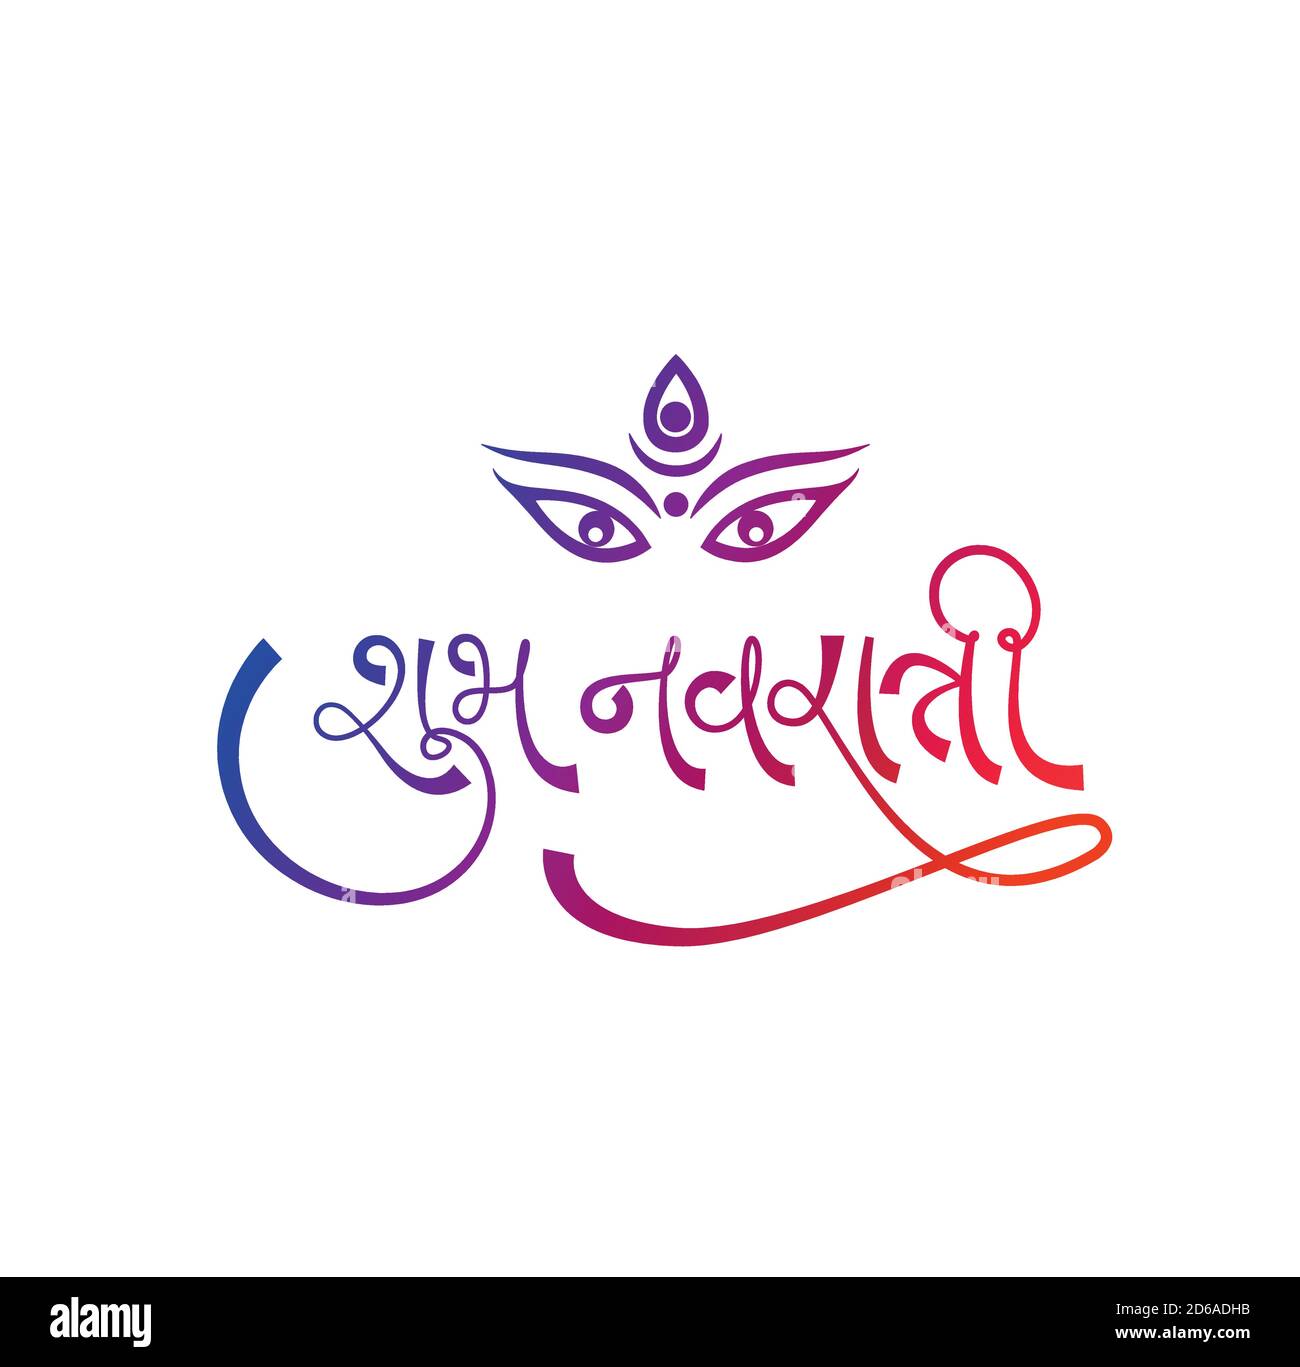 Happy Navratri written in Devanagari Calligraphy with lord Durga eyes.  Navratri means Nine days festival for lord Durga According Hindu calendar. Stock Vector